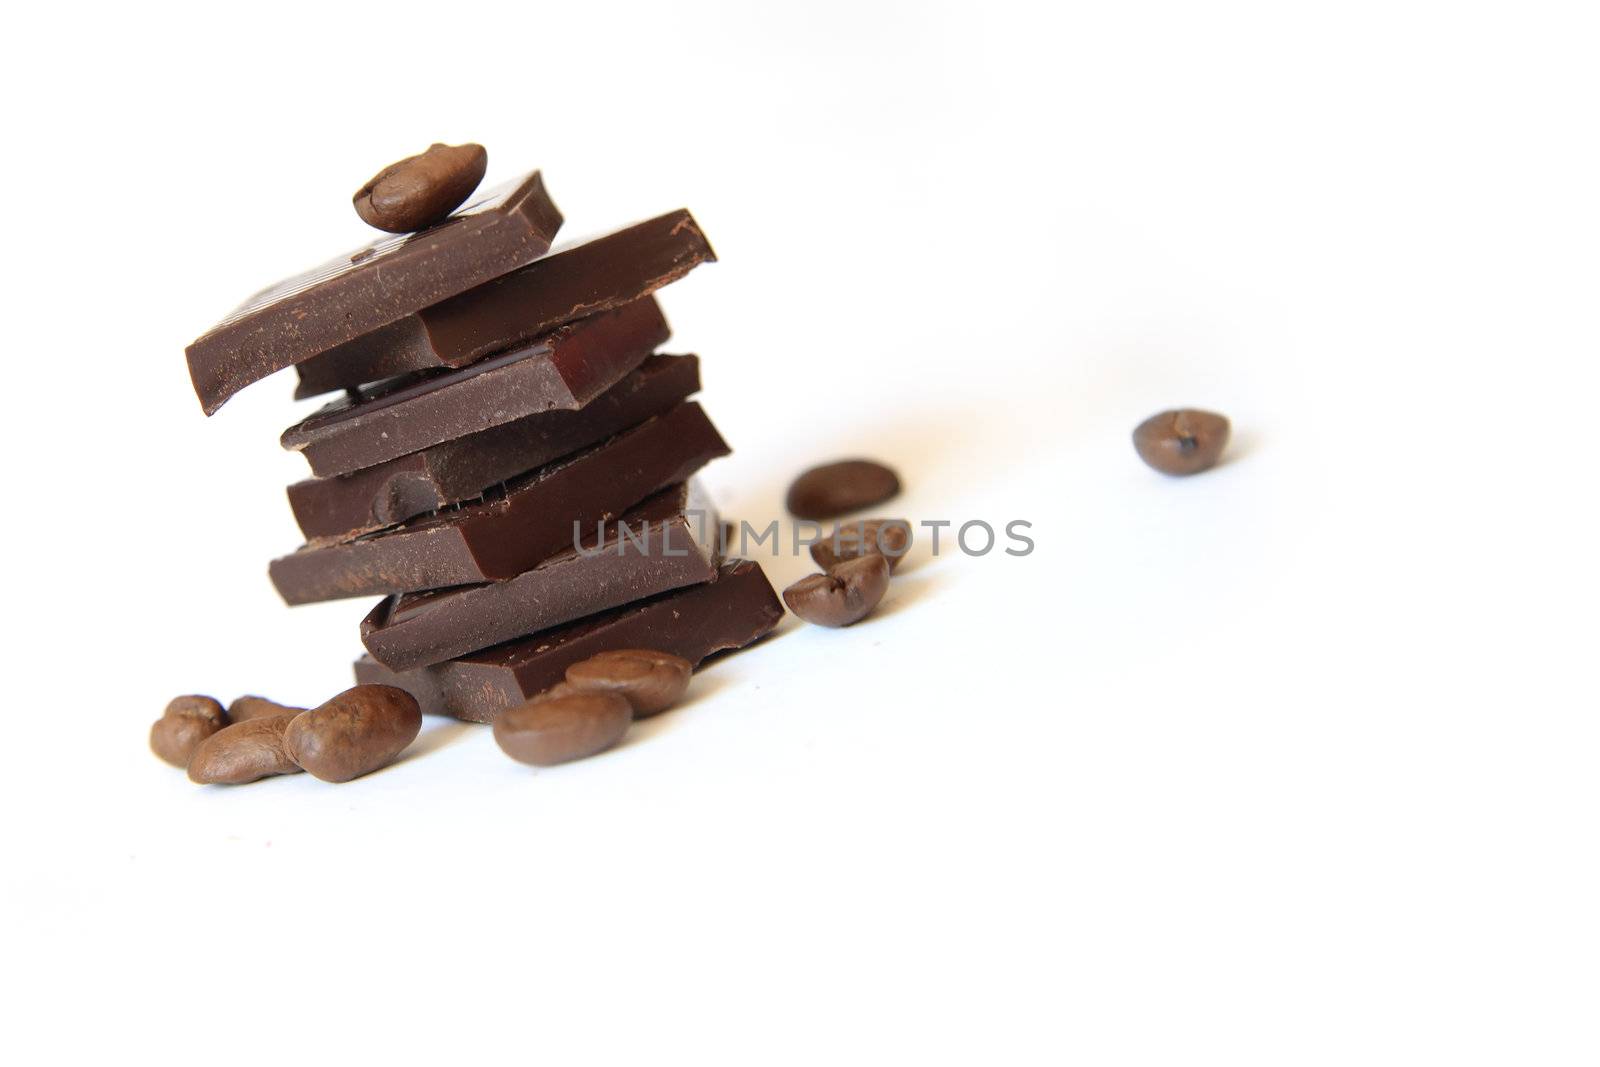 Heap of chocolate and coffee beans by Kudryashka